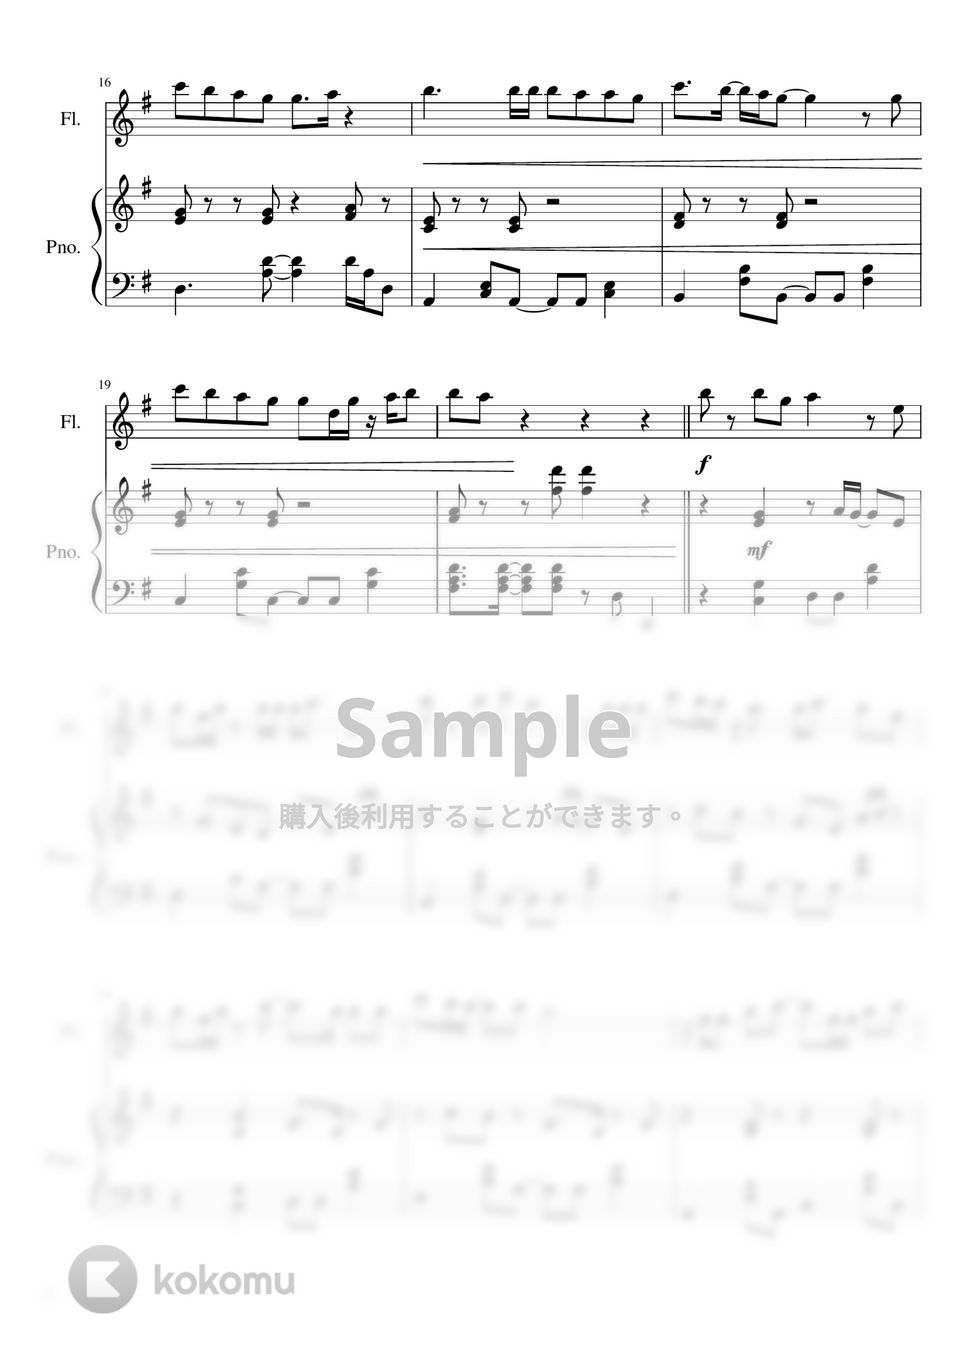 NiziU - Step and a step (フルート&ピアノ伴奏) by PiaFlu